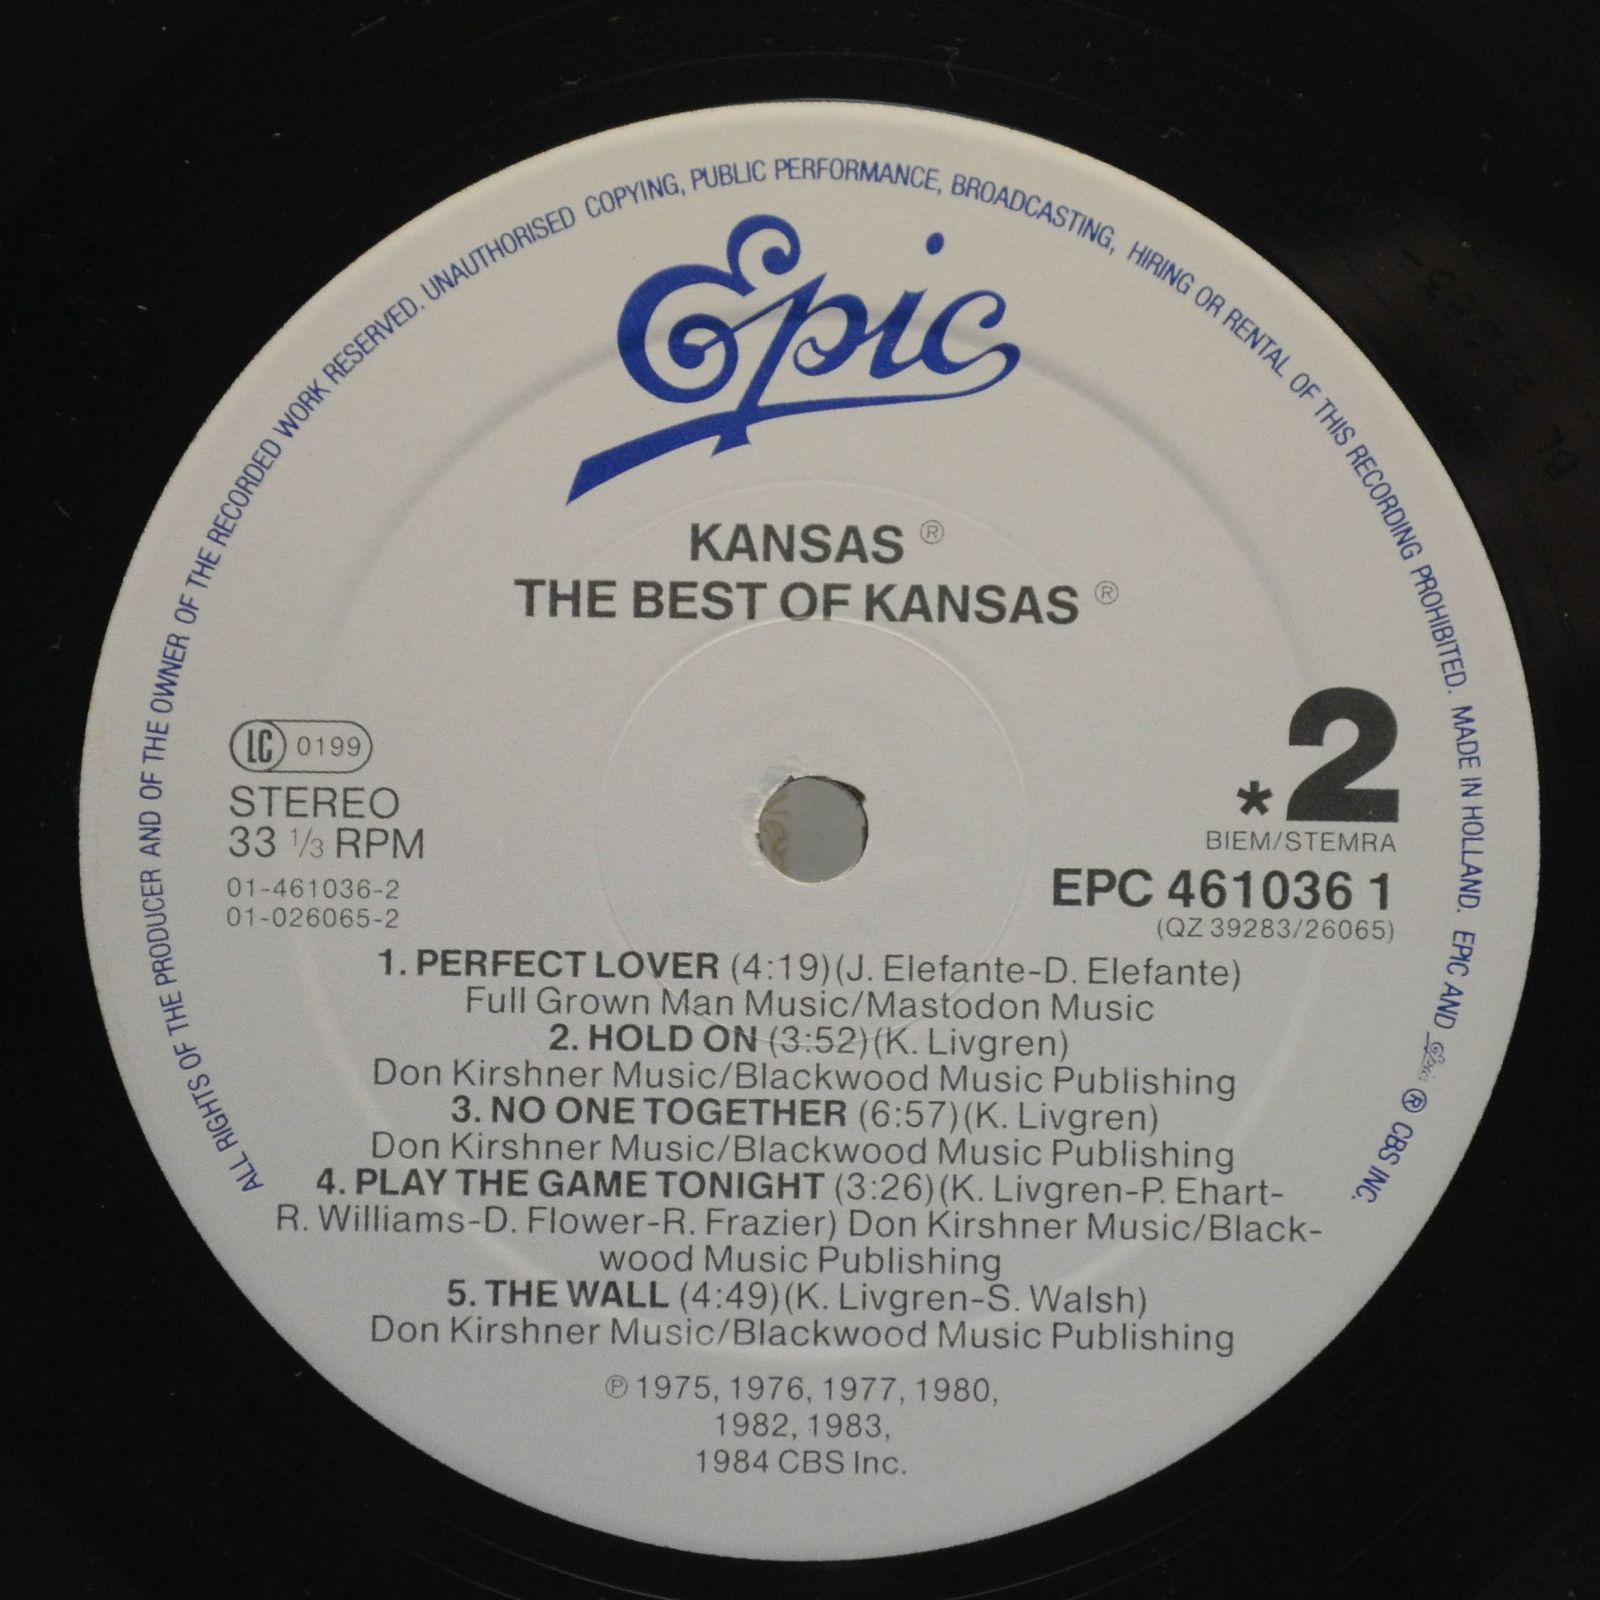 Kansas — The Best Of Kansas, 1984